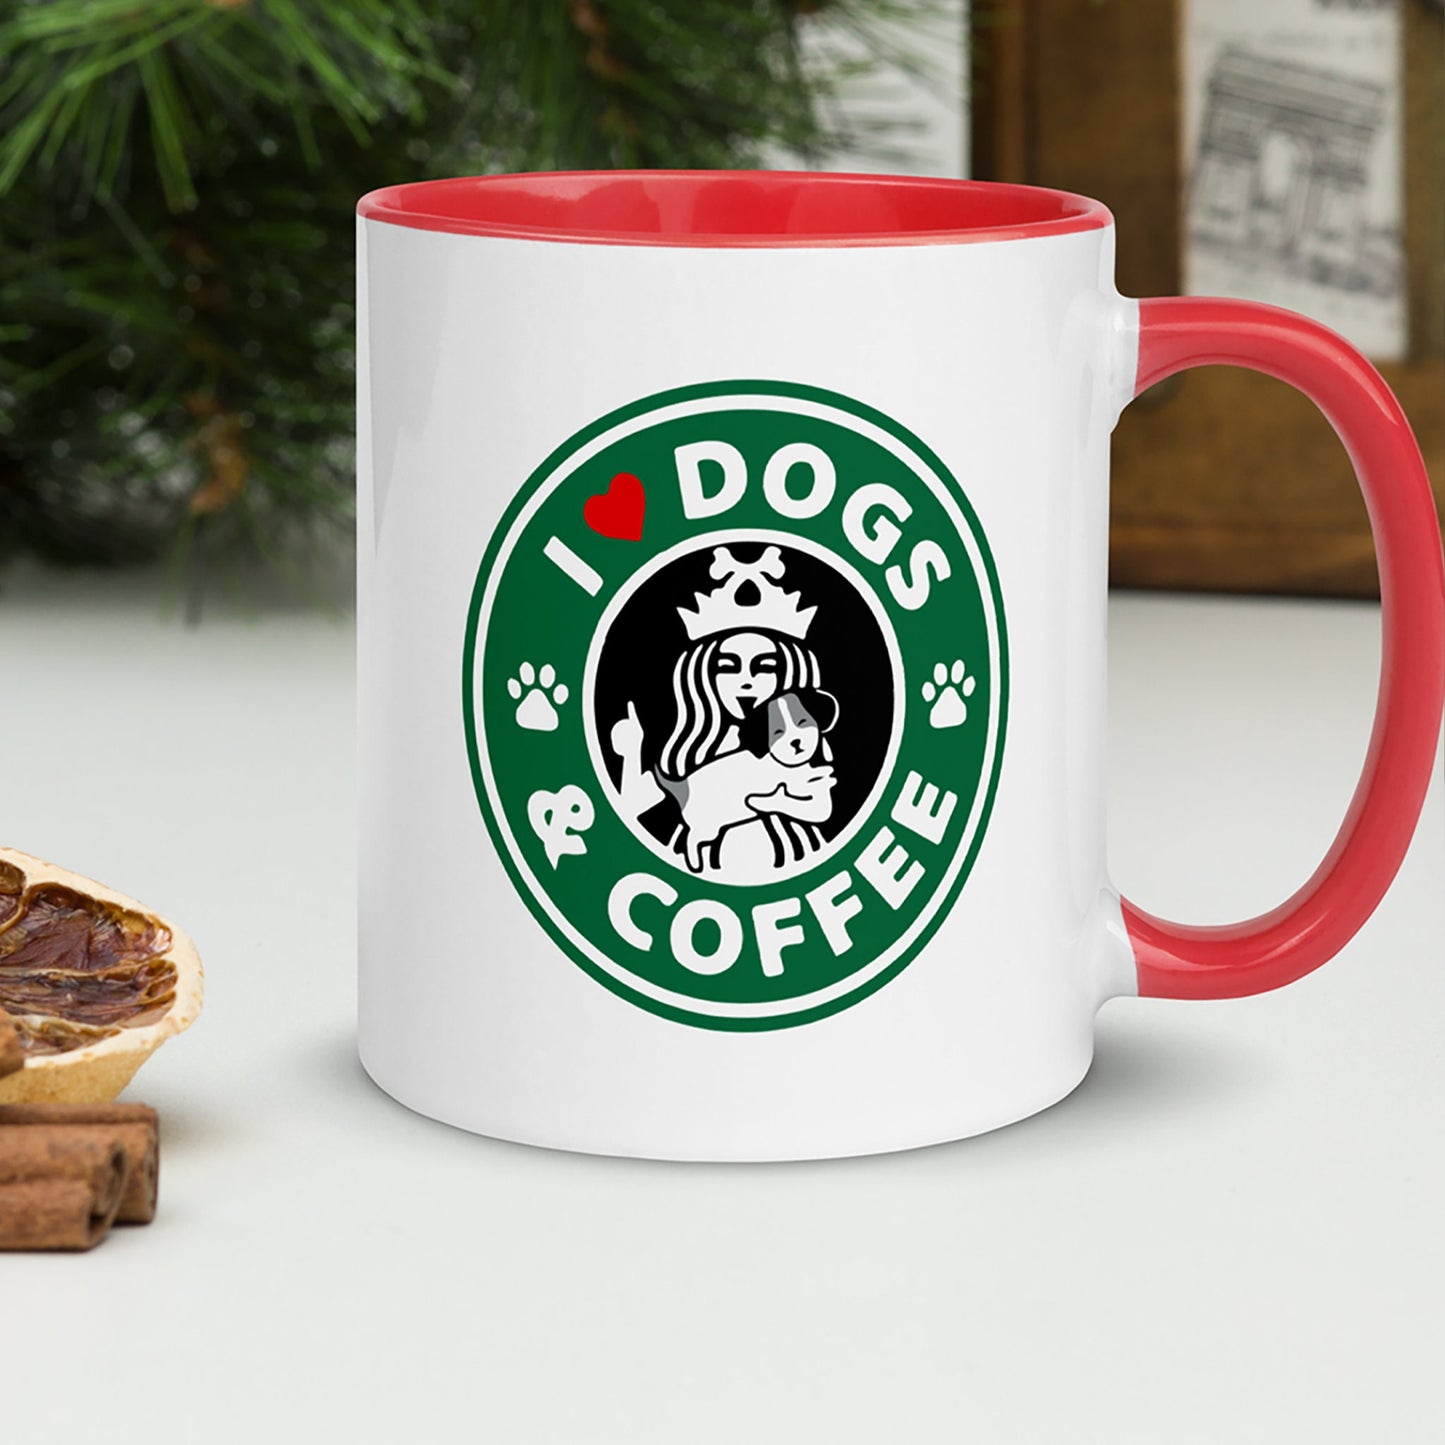 I love Dogs & Coffee Mug